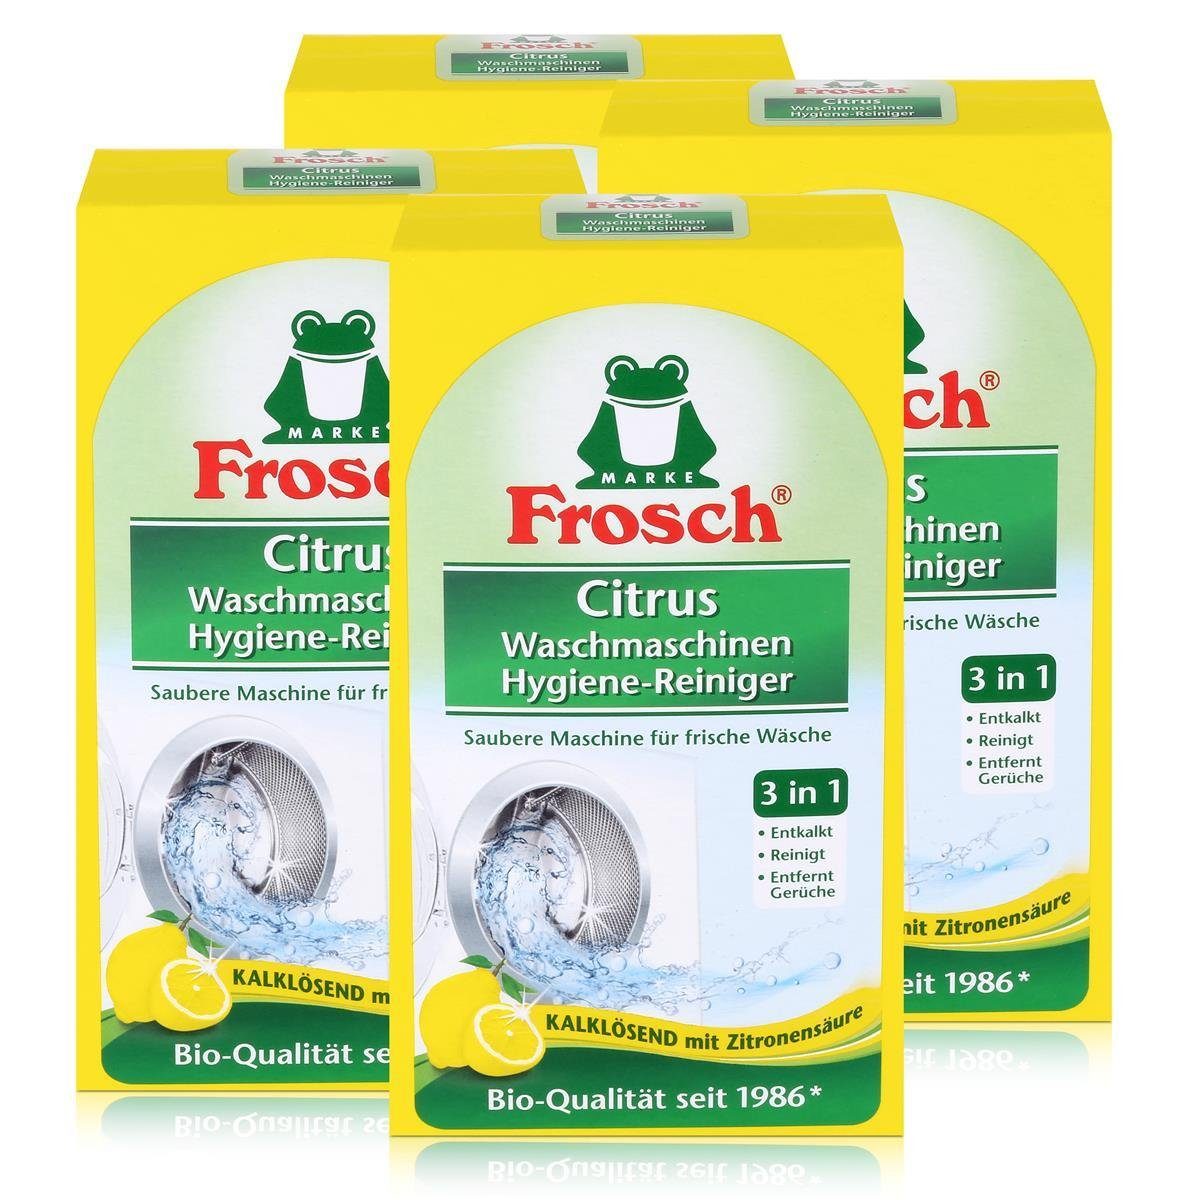 FROSCH Frosch Citrus Waschmaschinen Hygiene-Reiniger 250g - Kalklösend (4er P Spezialwaschmittel